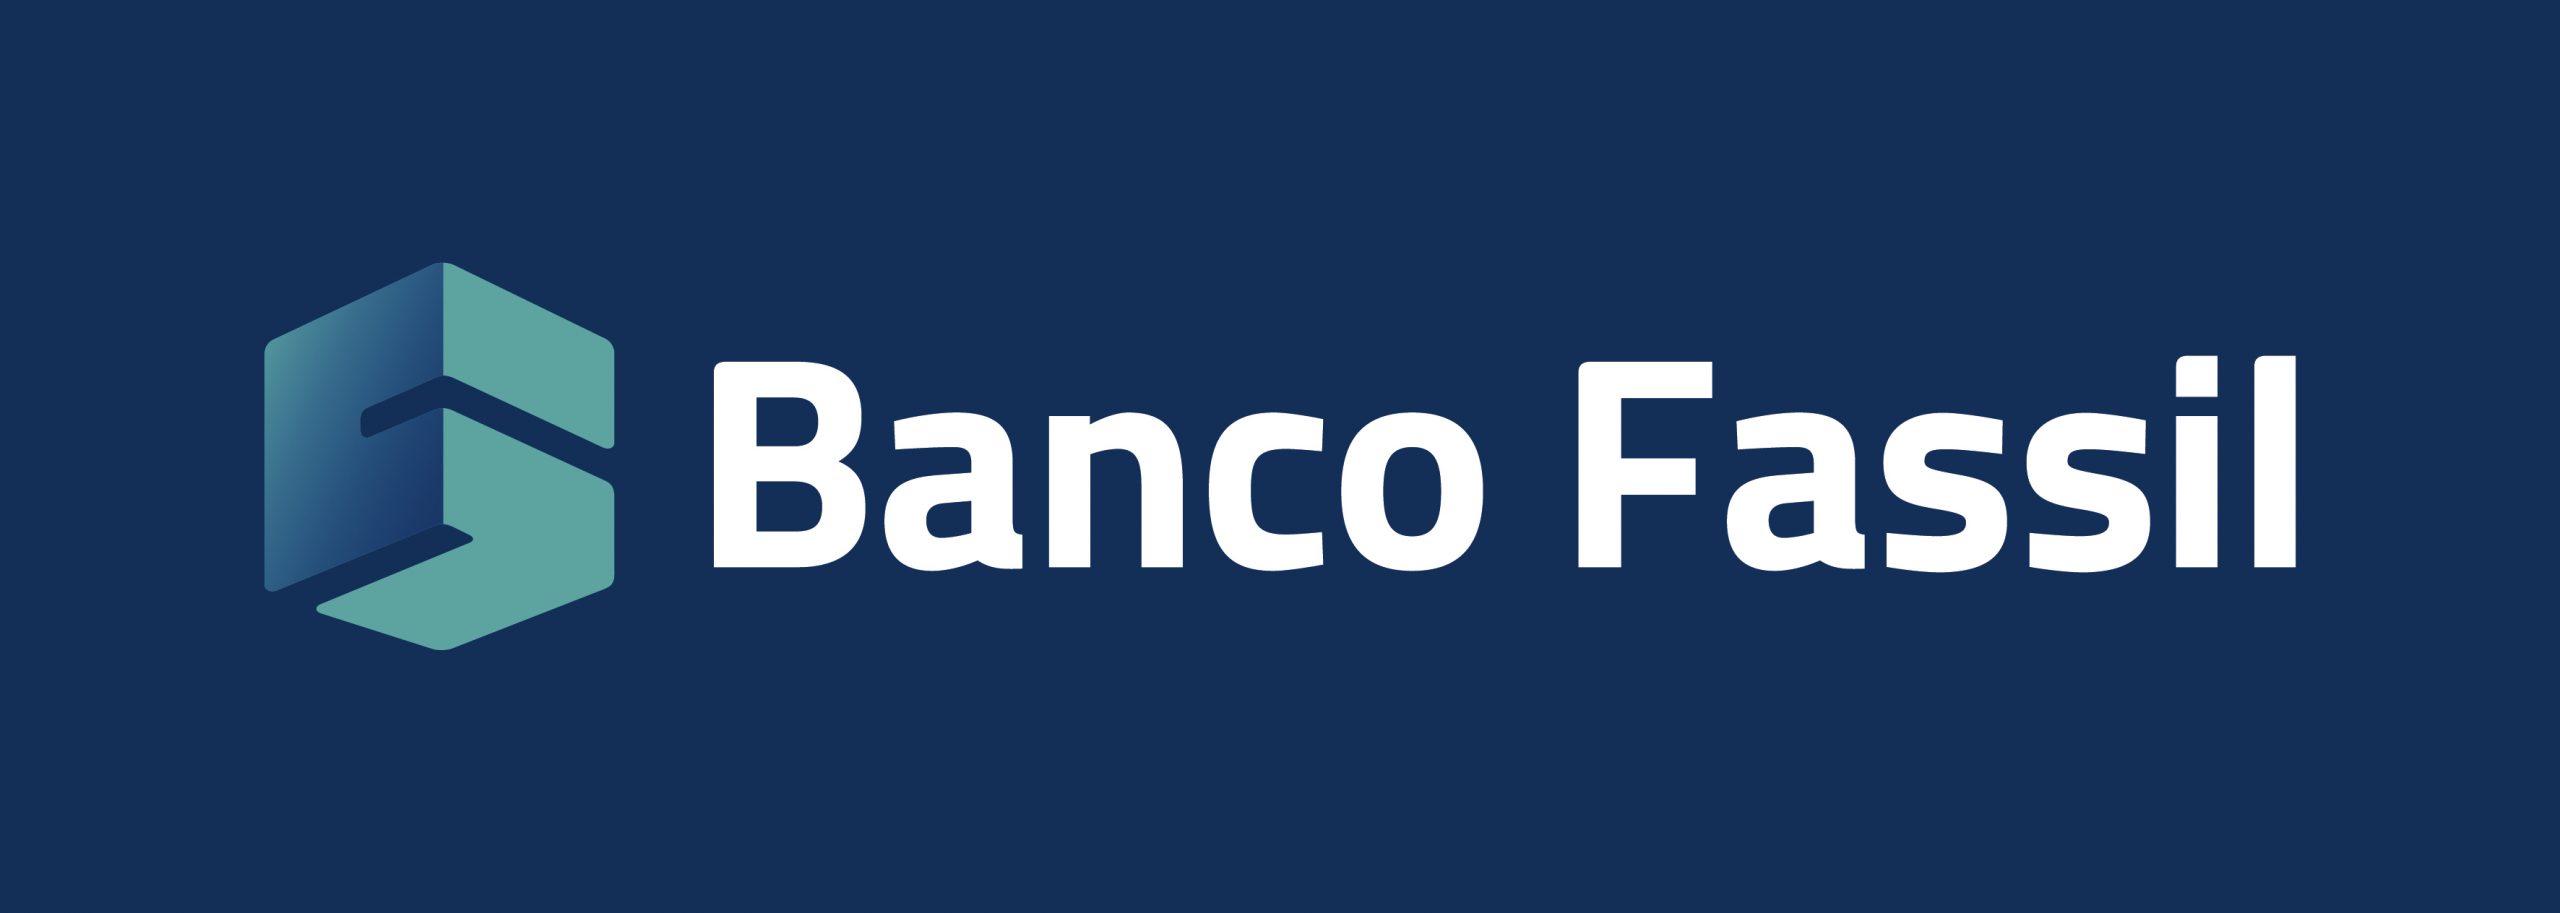 Banco fasil